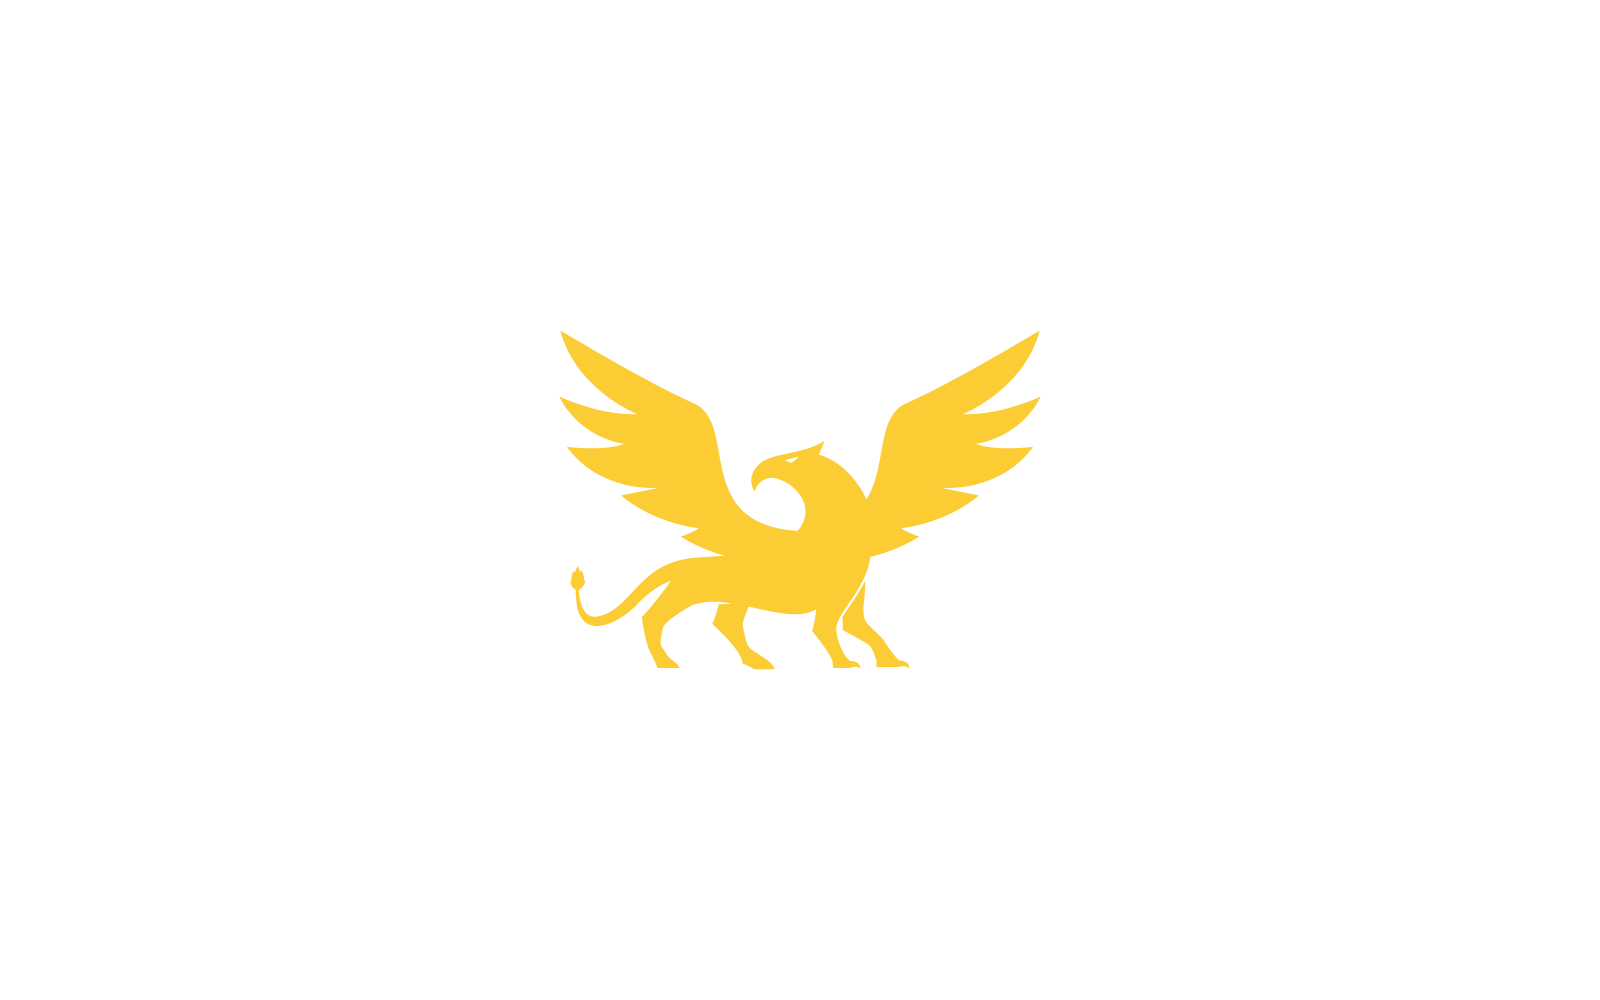 Griffin logo illustratie platte ontwerpsjabloon